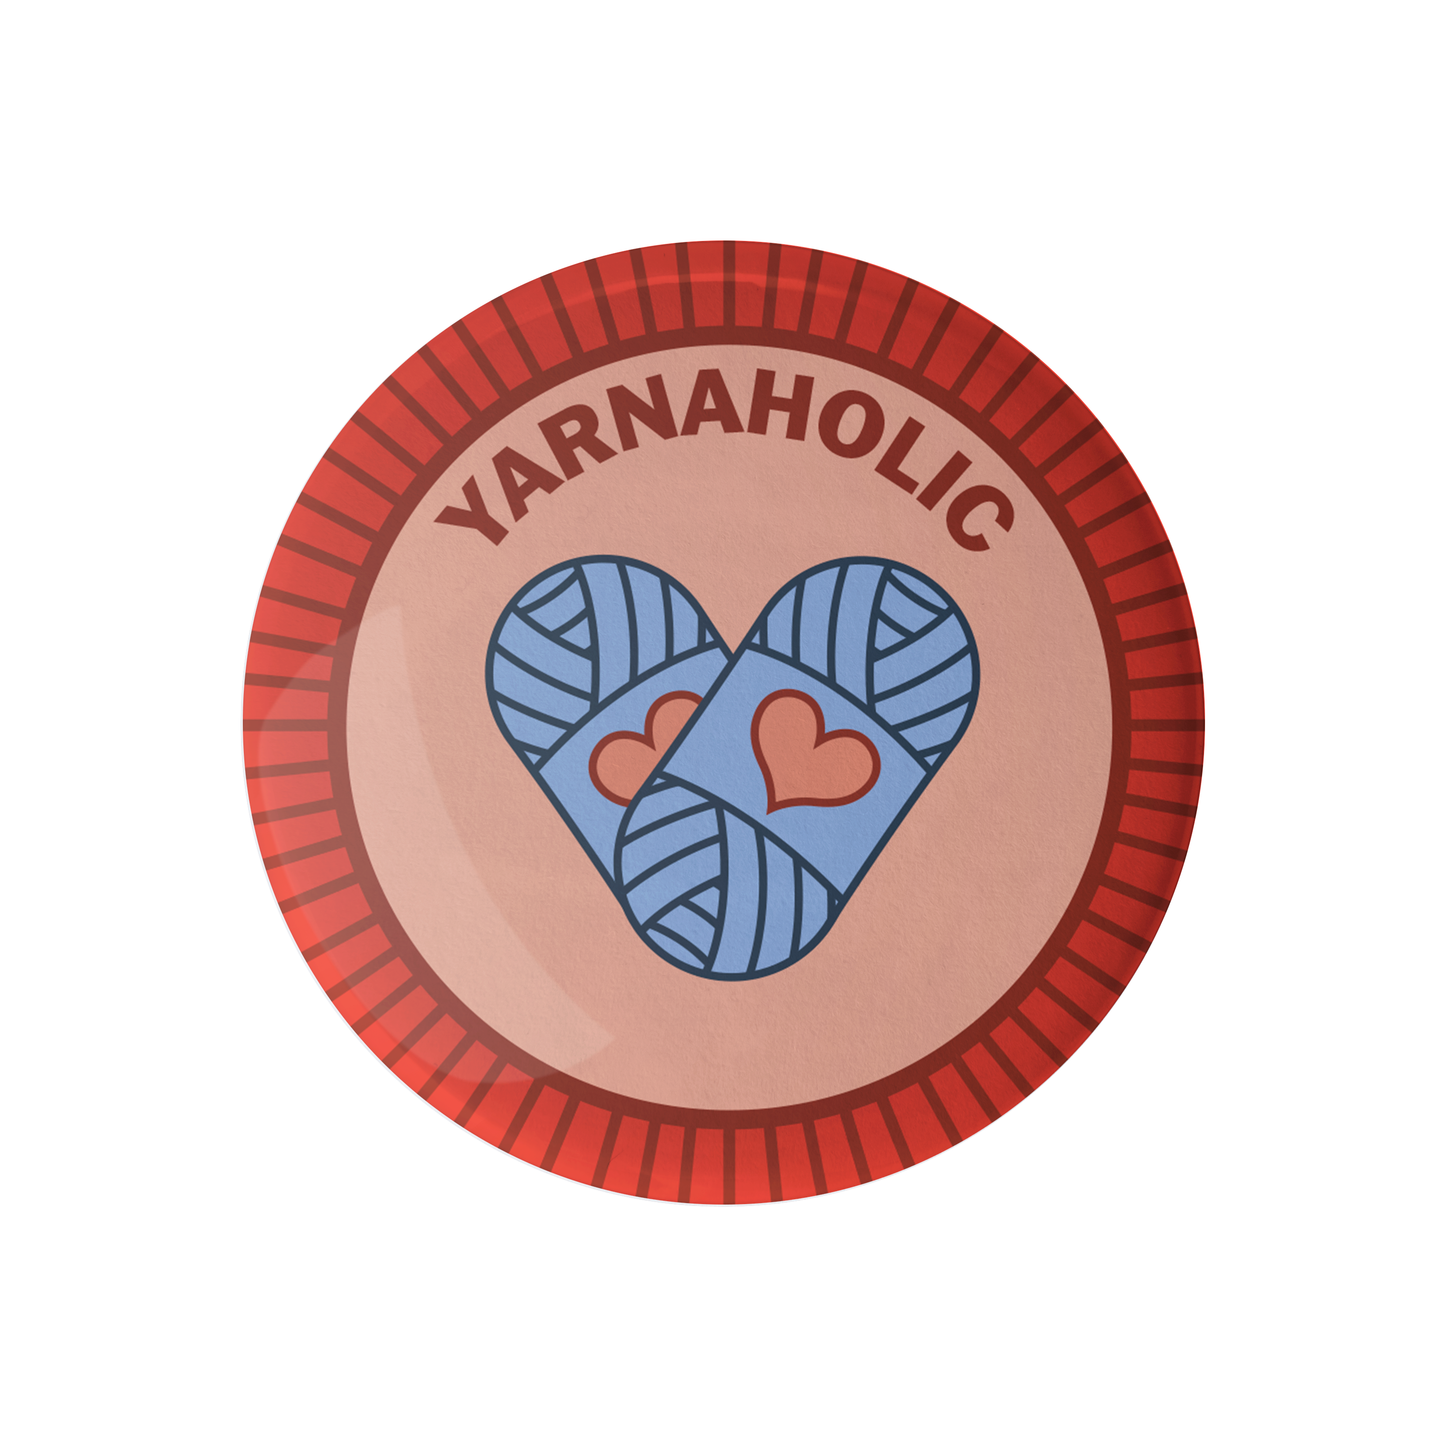 Yarnaholic Knitting Merit Badge